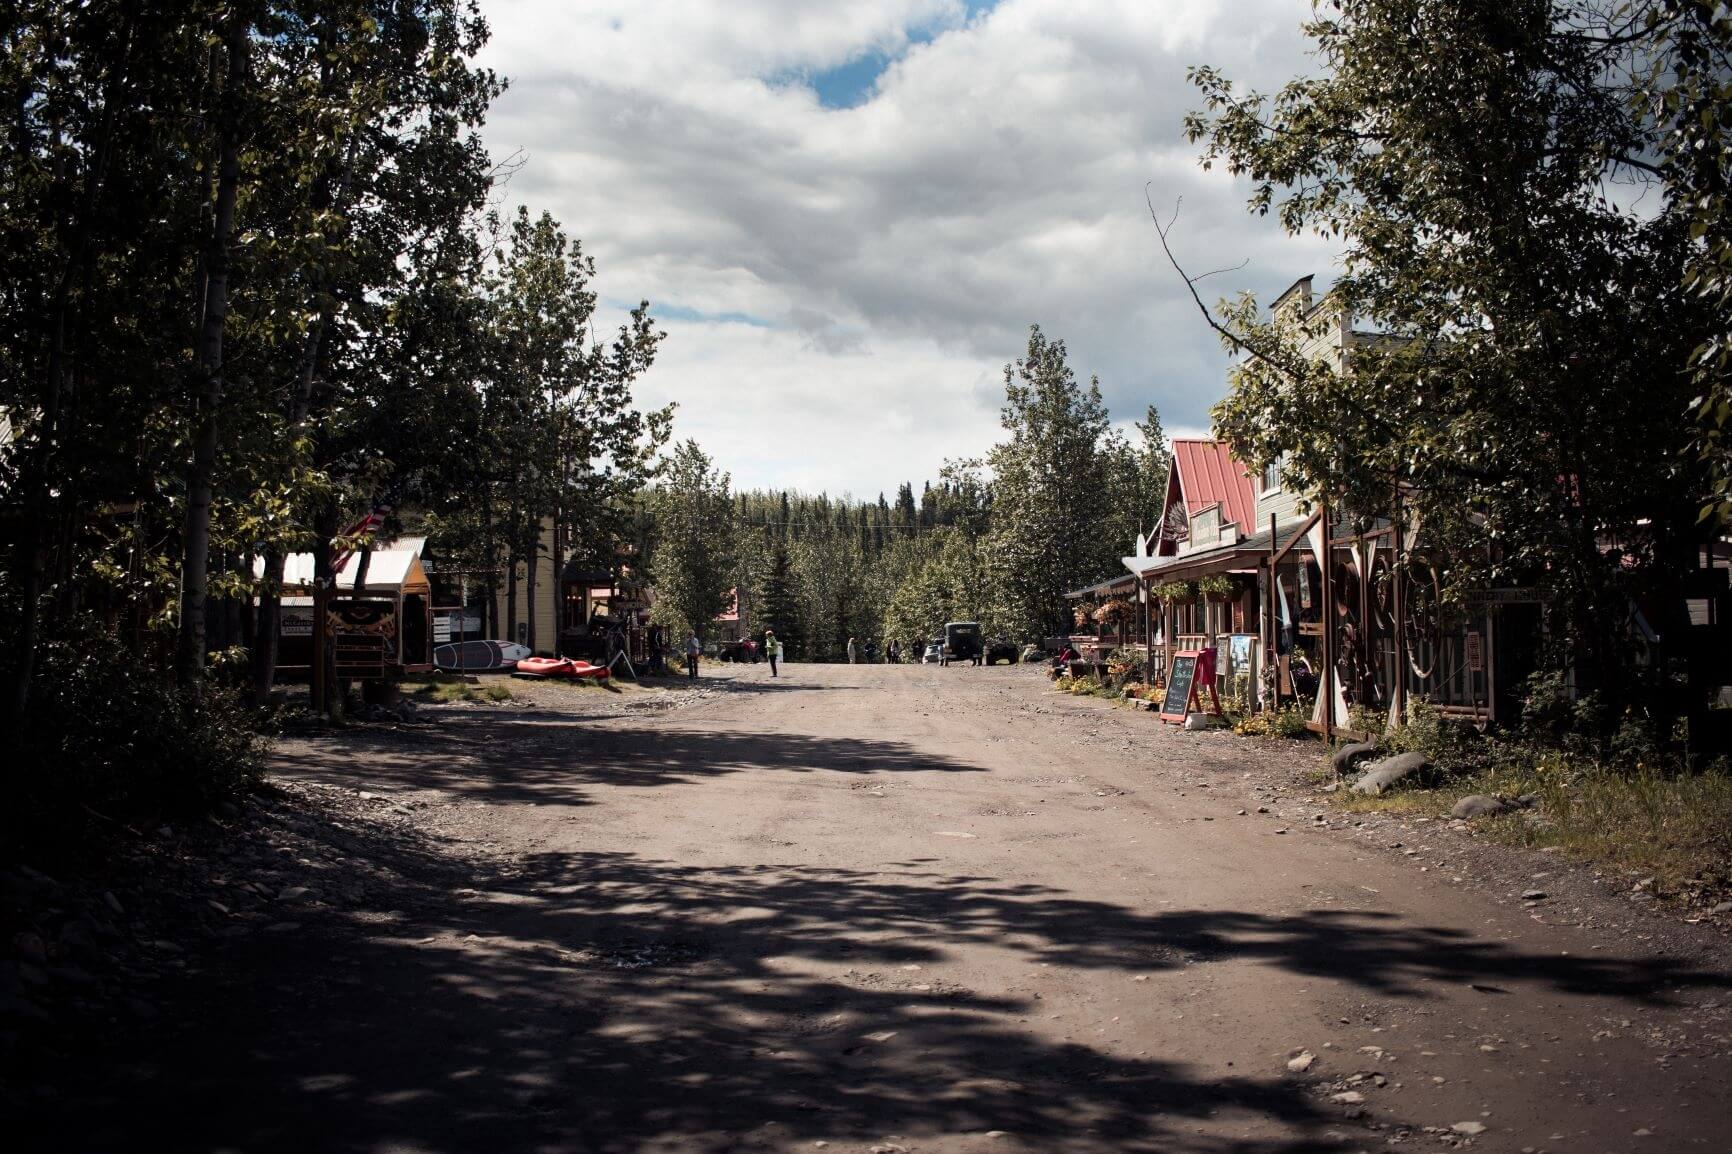 main street of old mining town in Alaska